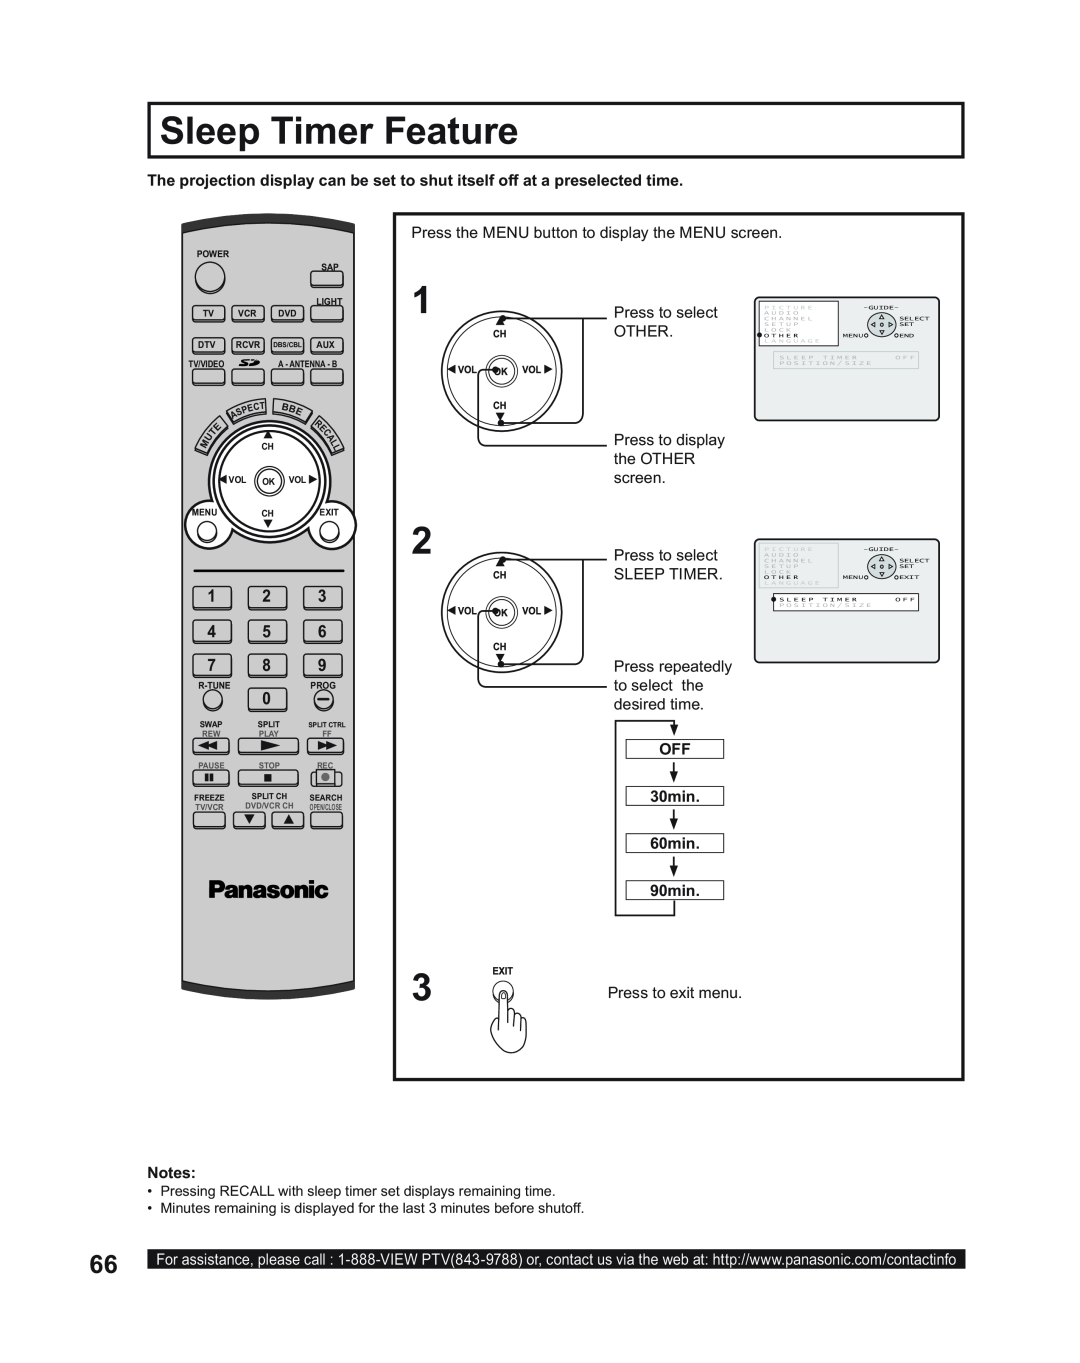 Panasonic PT-43LC14, PT-50LC14, PT-60LC14 manual Sleep Timer Feature, OFF 30min, 60min 90min 